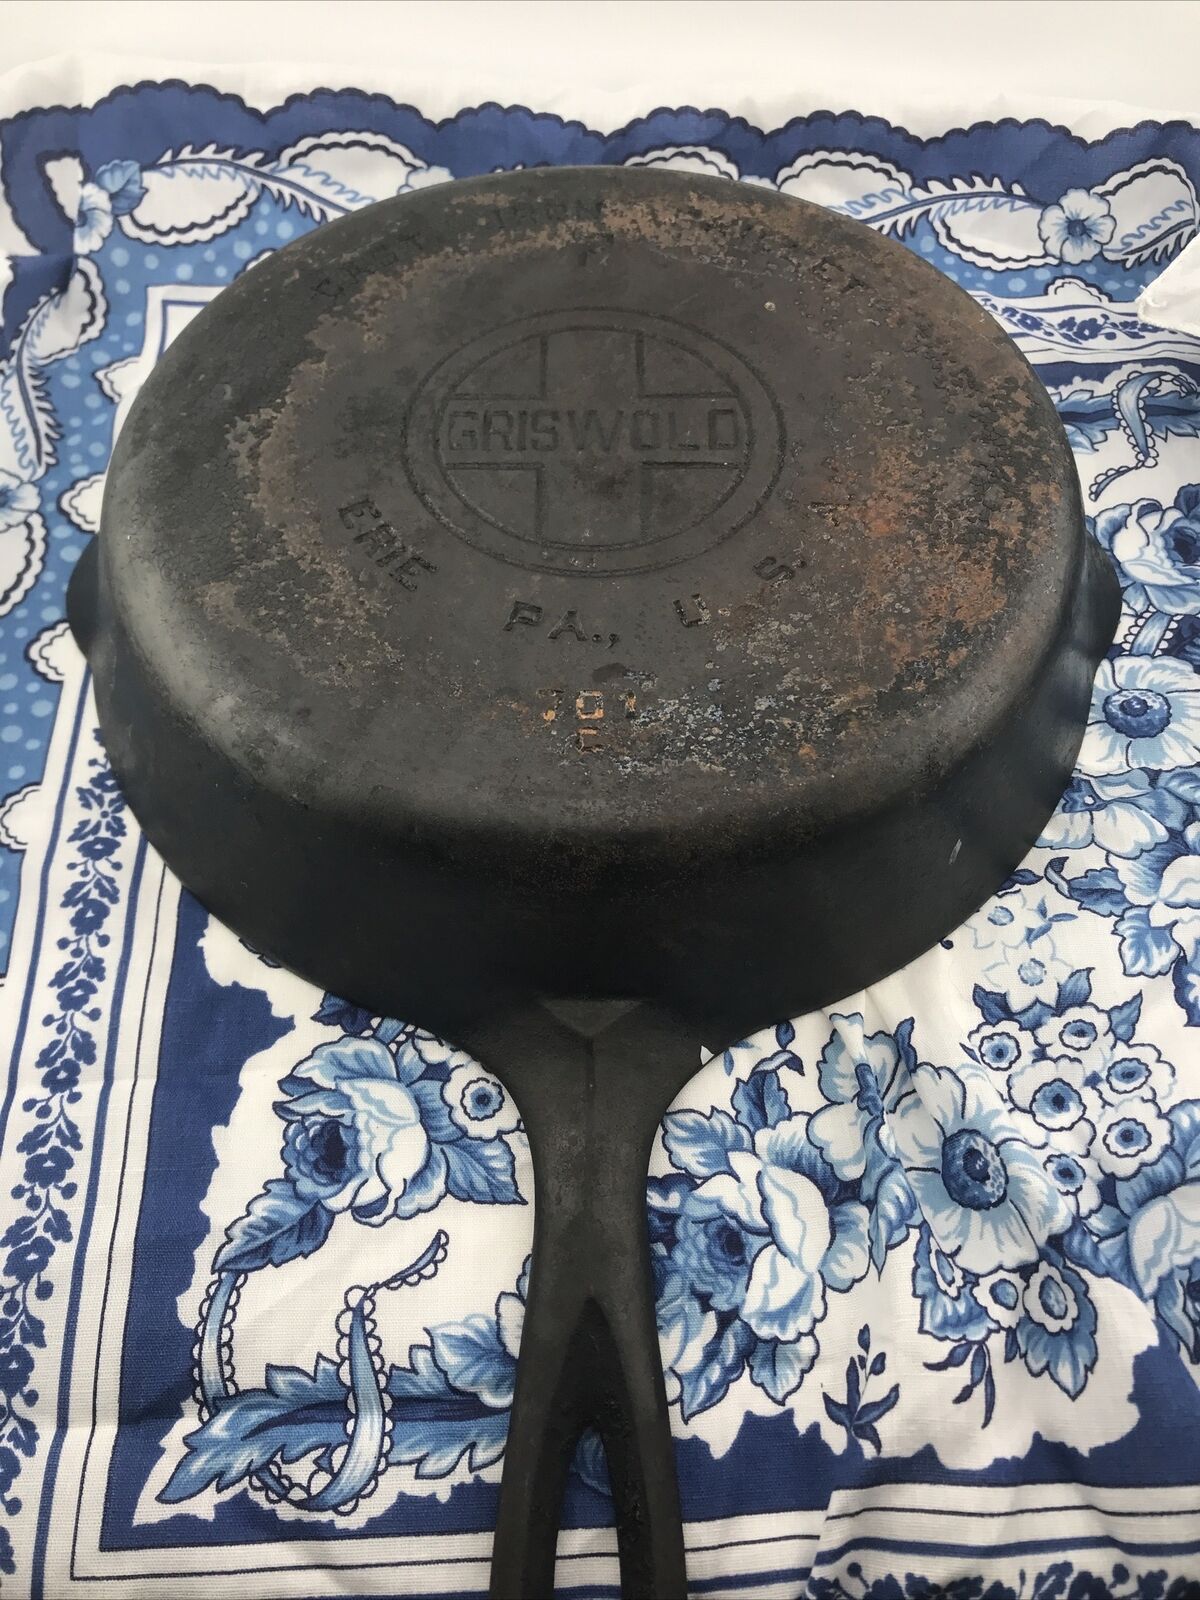 Vintage Griswold Erie Pa USA #7 Cast iron Skillet Frying Pan No 701 C Large Logo